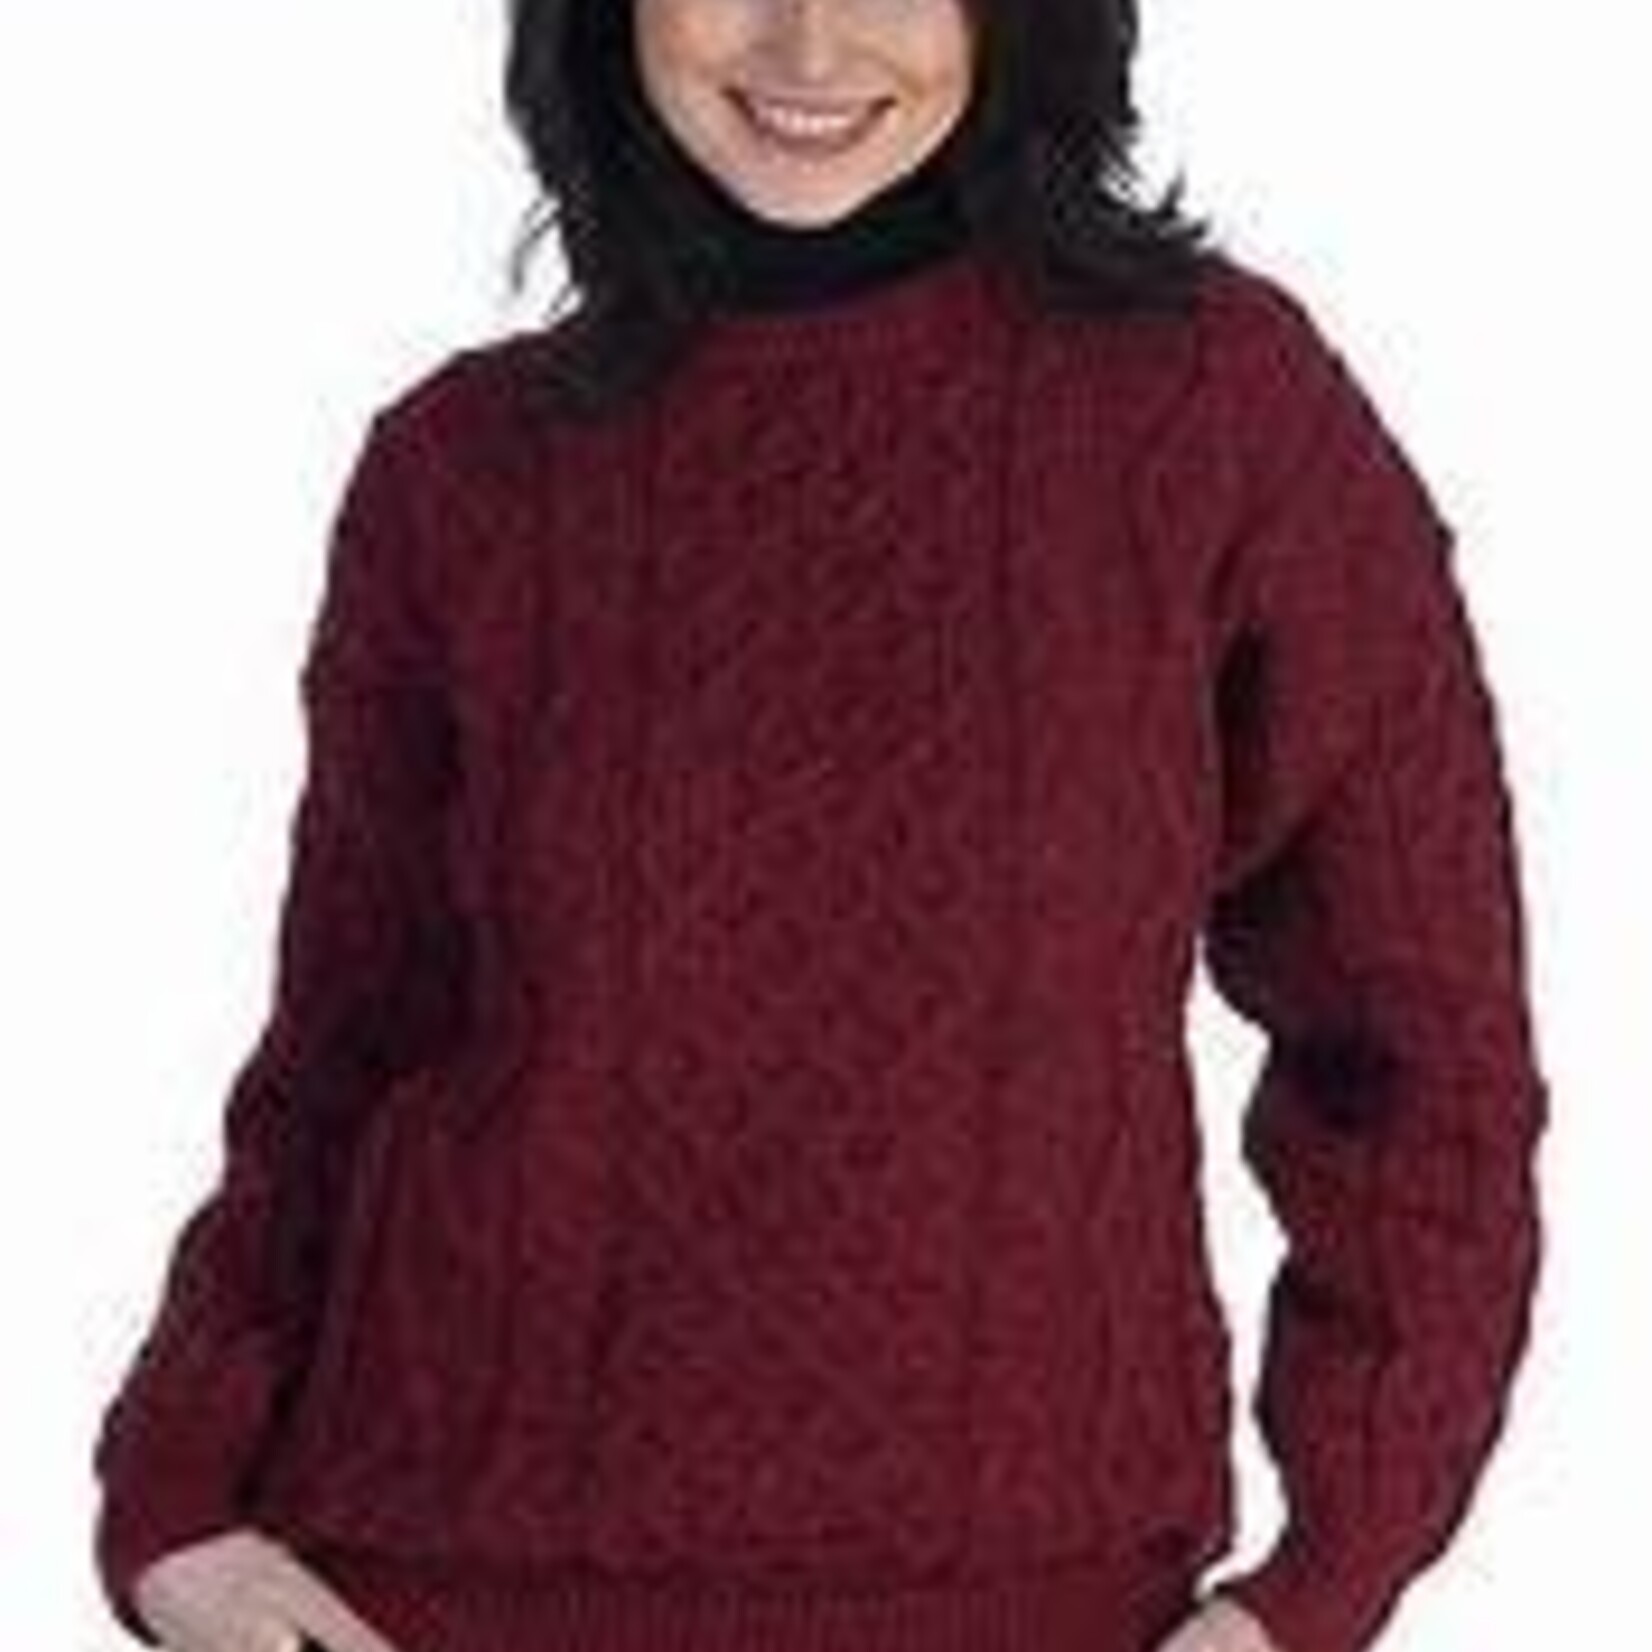 Kerry Woolen Mills Aran Pure New Wool Sweater *DISCONTINUED*